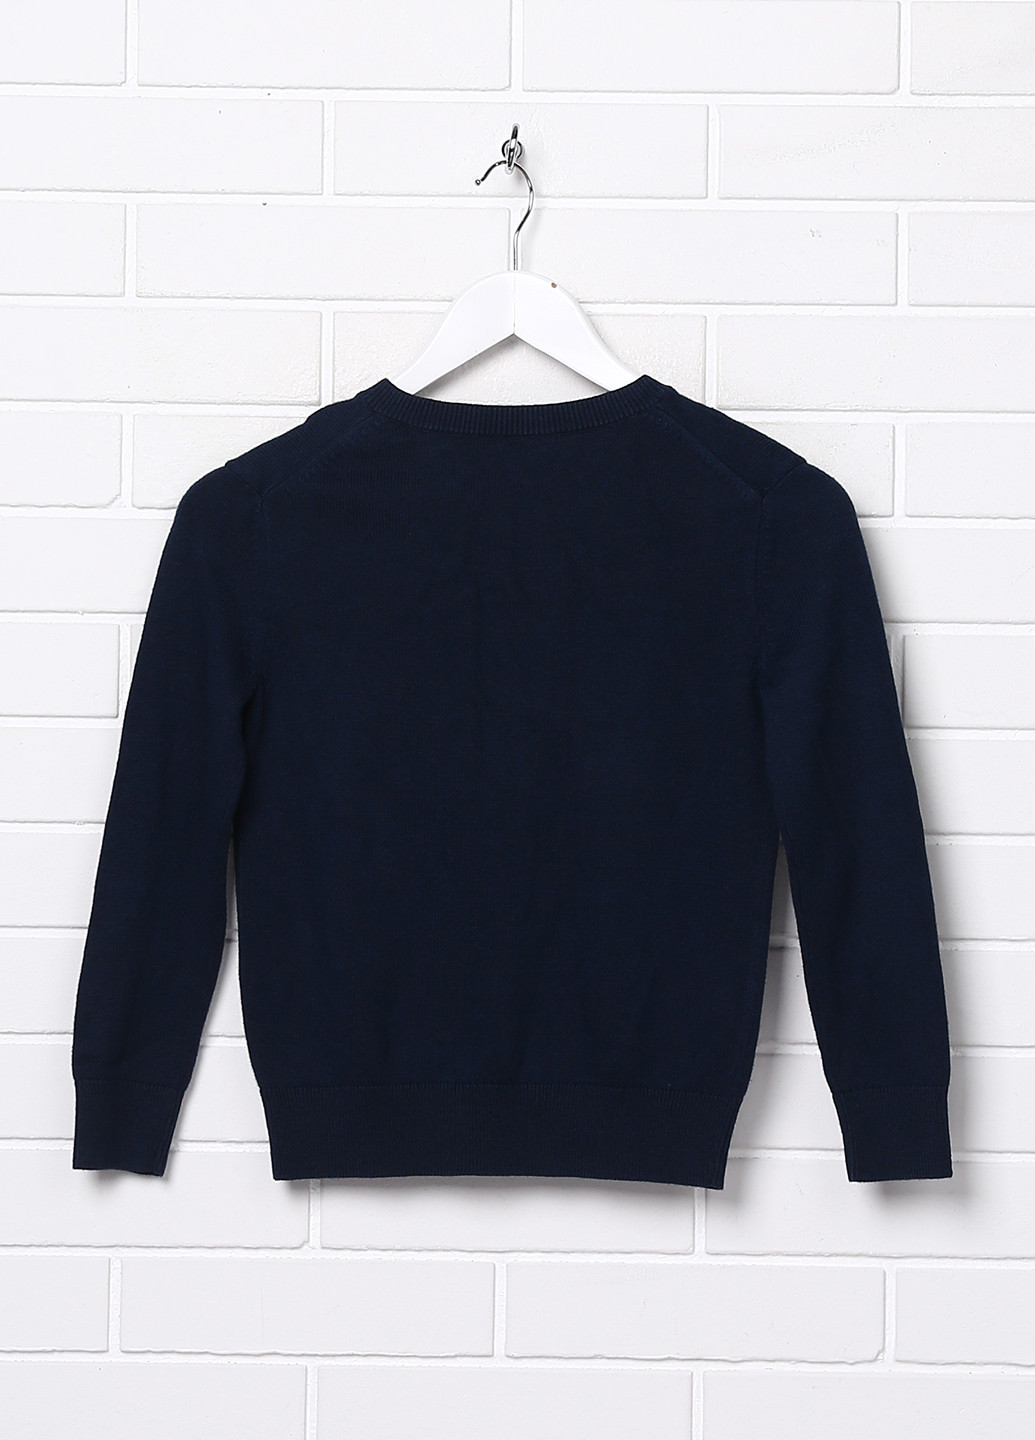 Темно-синий демисезонный пуловер пуловер Gap